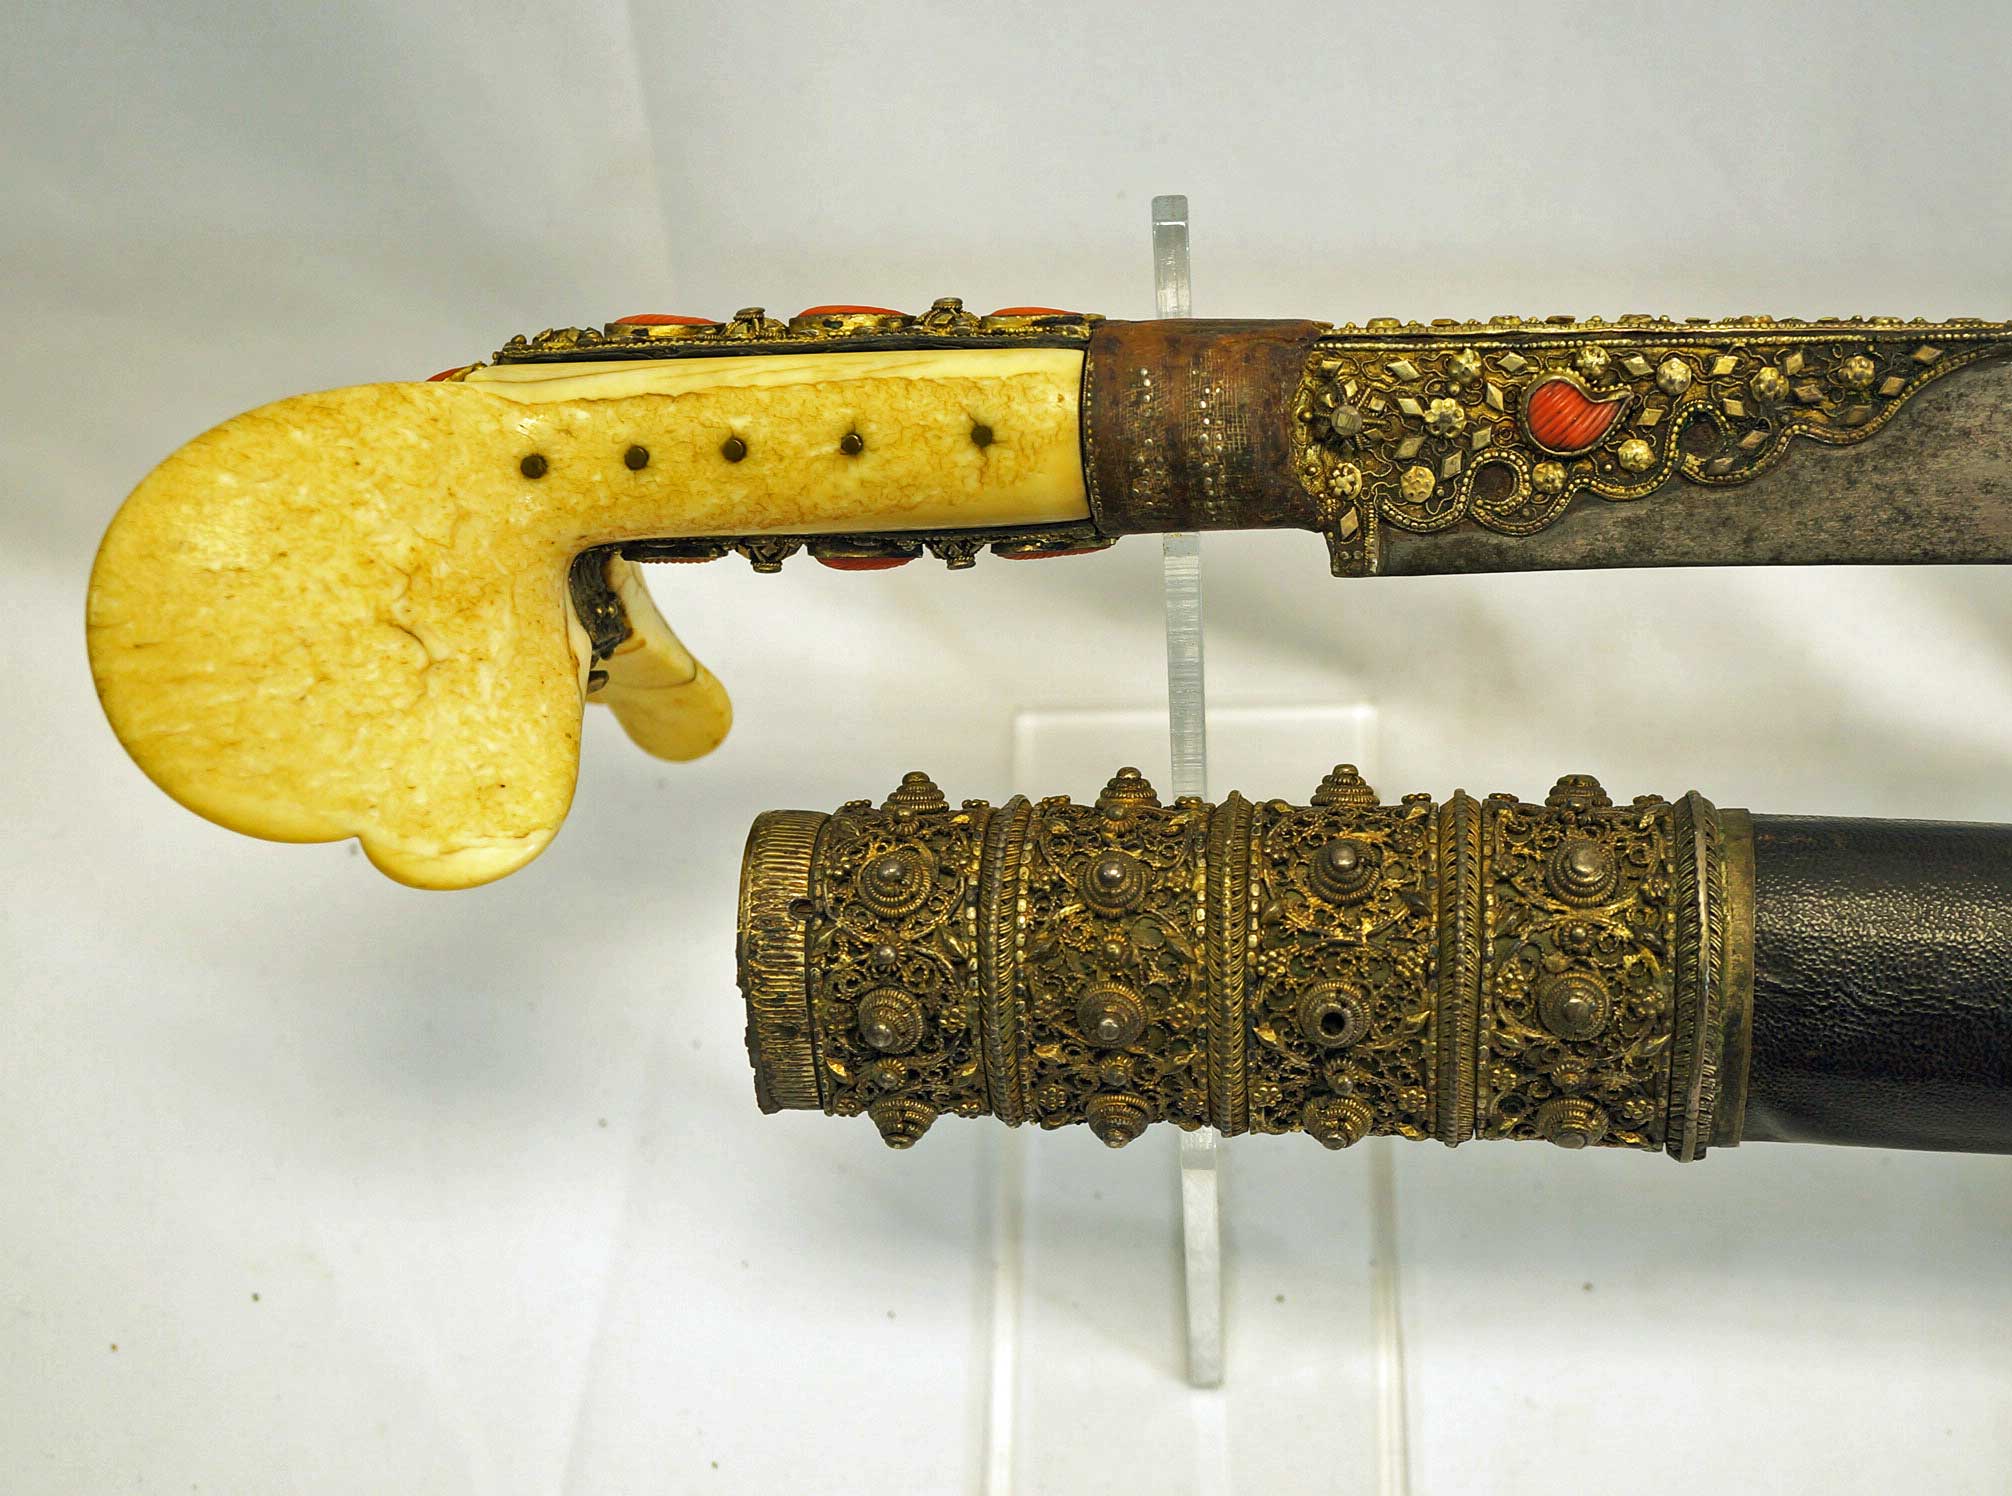 Turkish Ottoman Yataghan sword with scabbard.